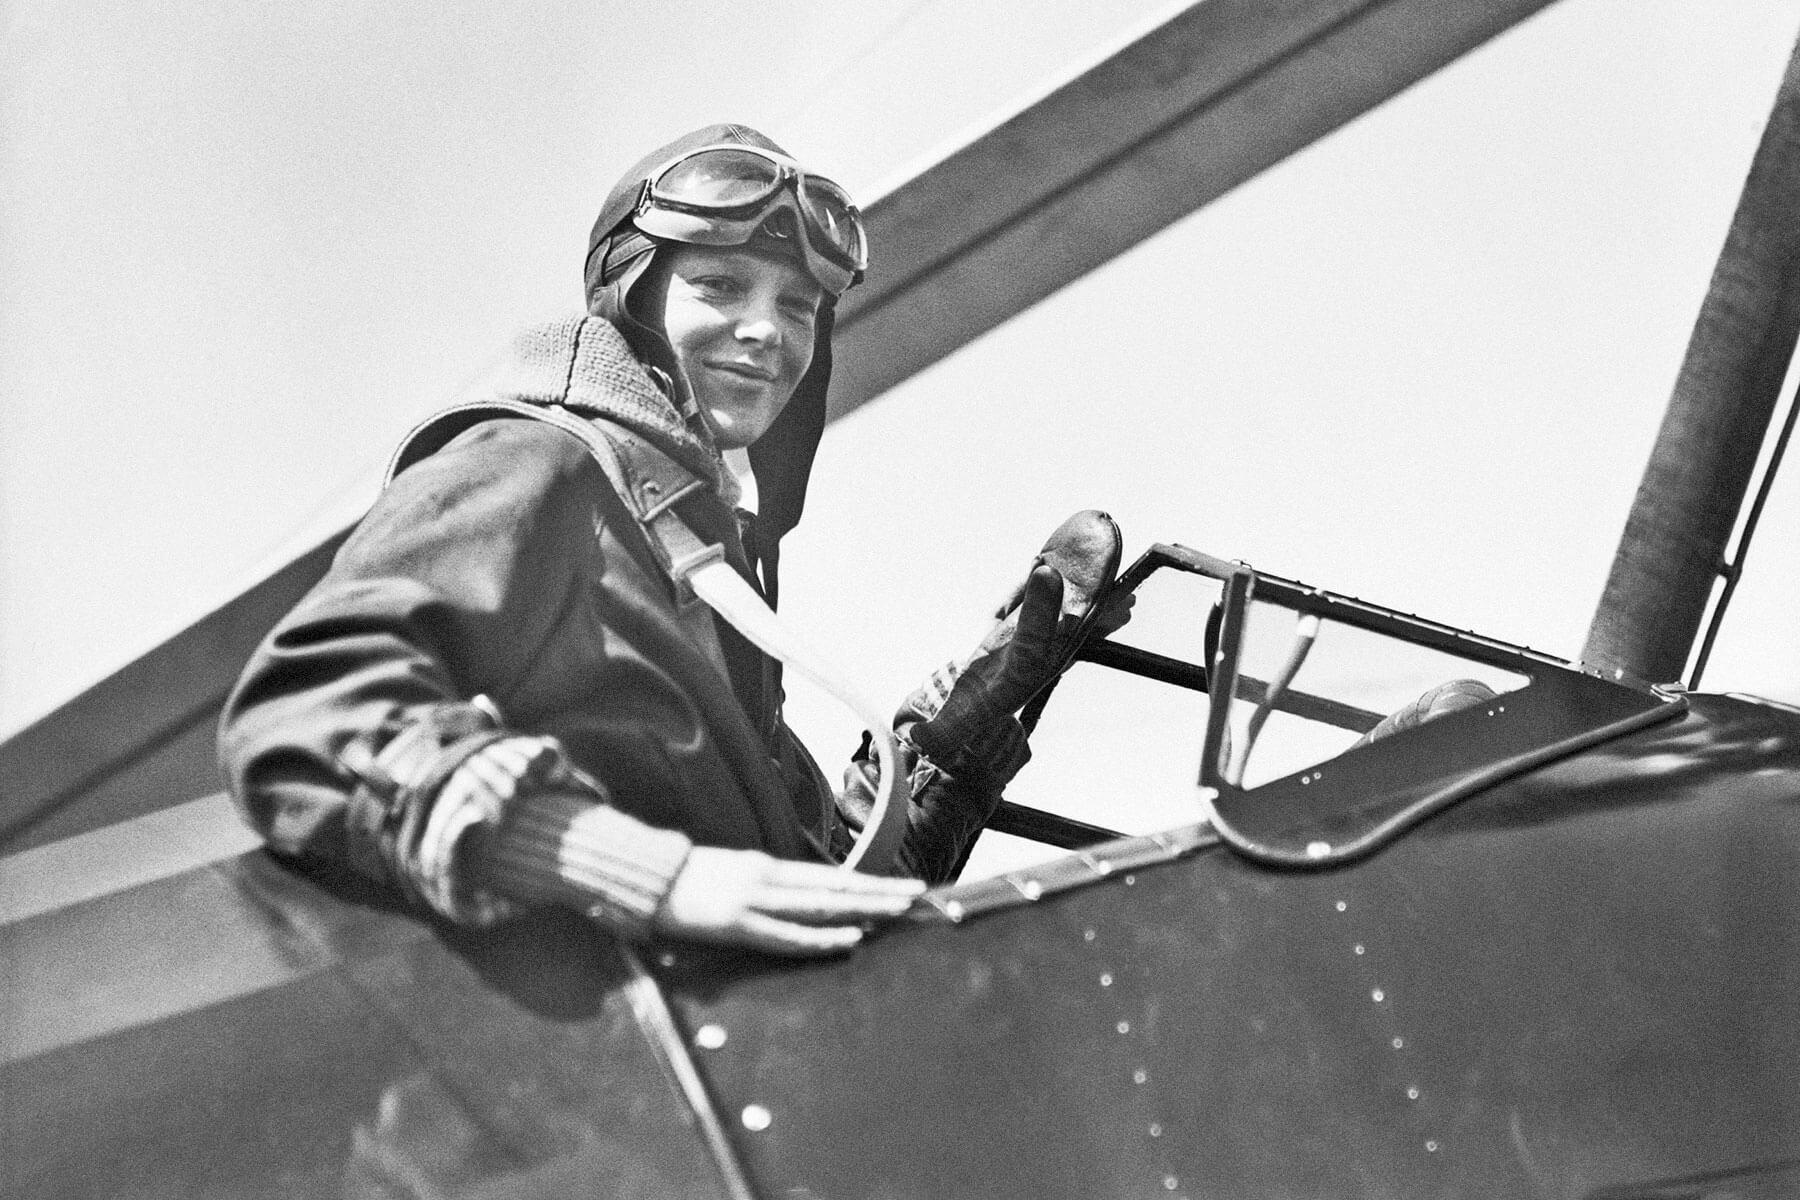 Amelia Earhart in airplane cockpit